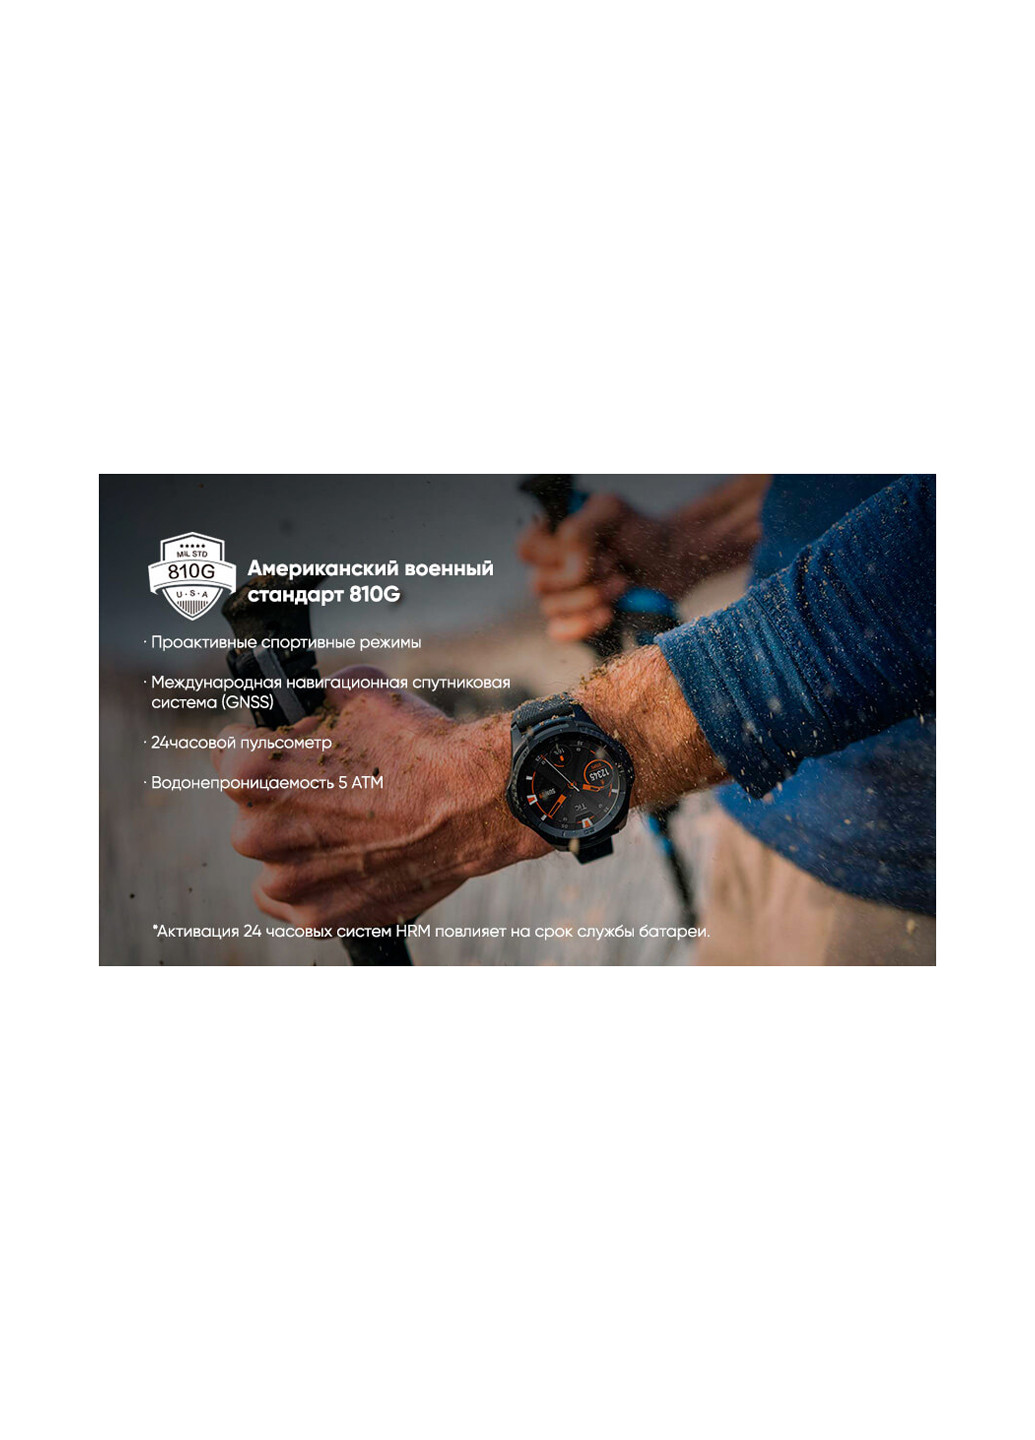 Смарт-часы MOBVOI ticwatch s2 wg12016 glacier white (p1022000500a) (144071616)